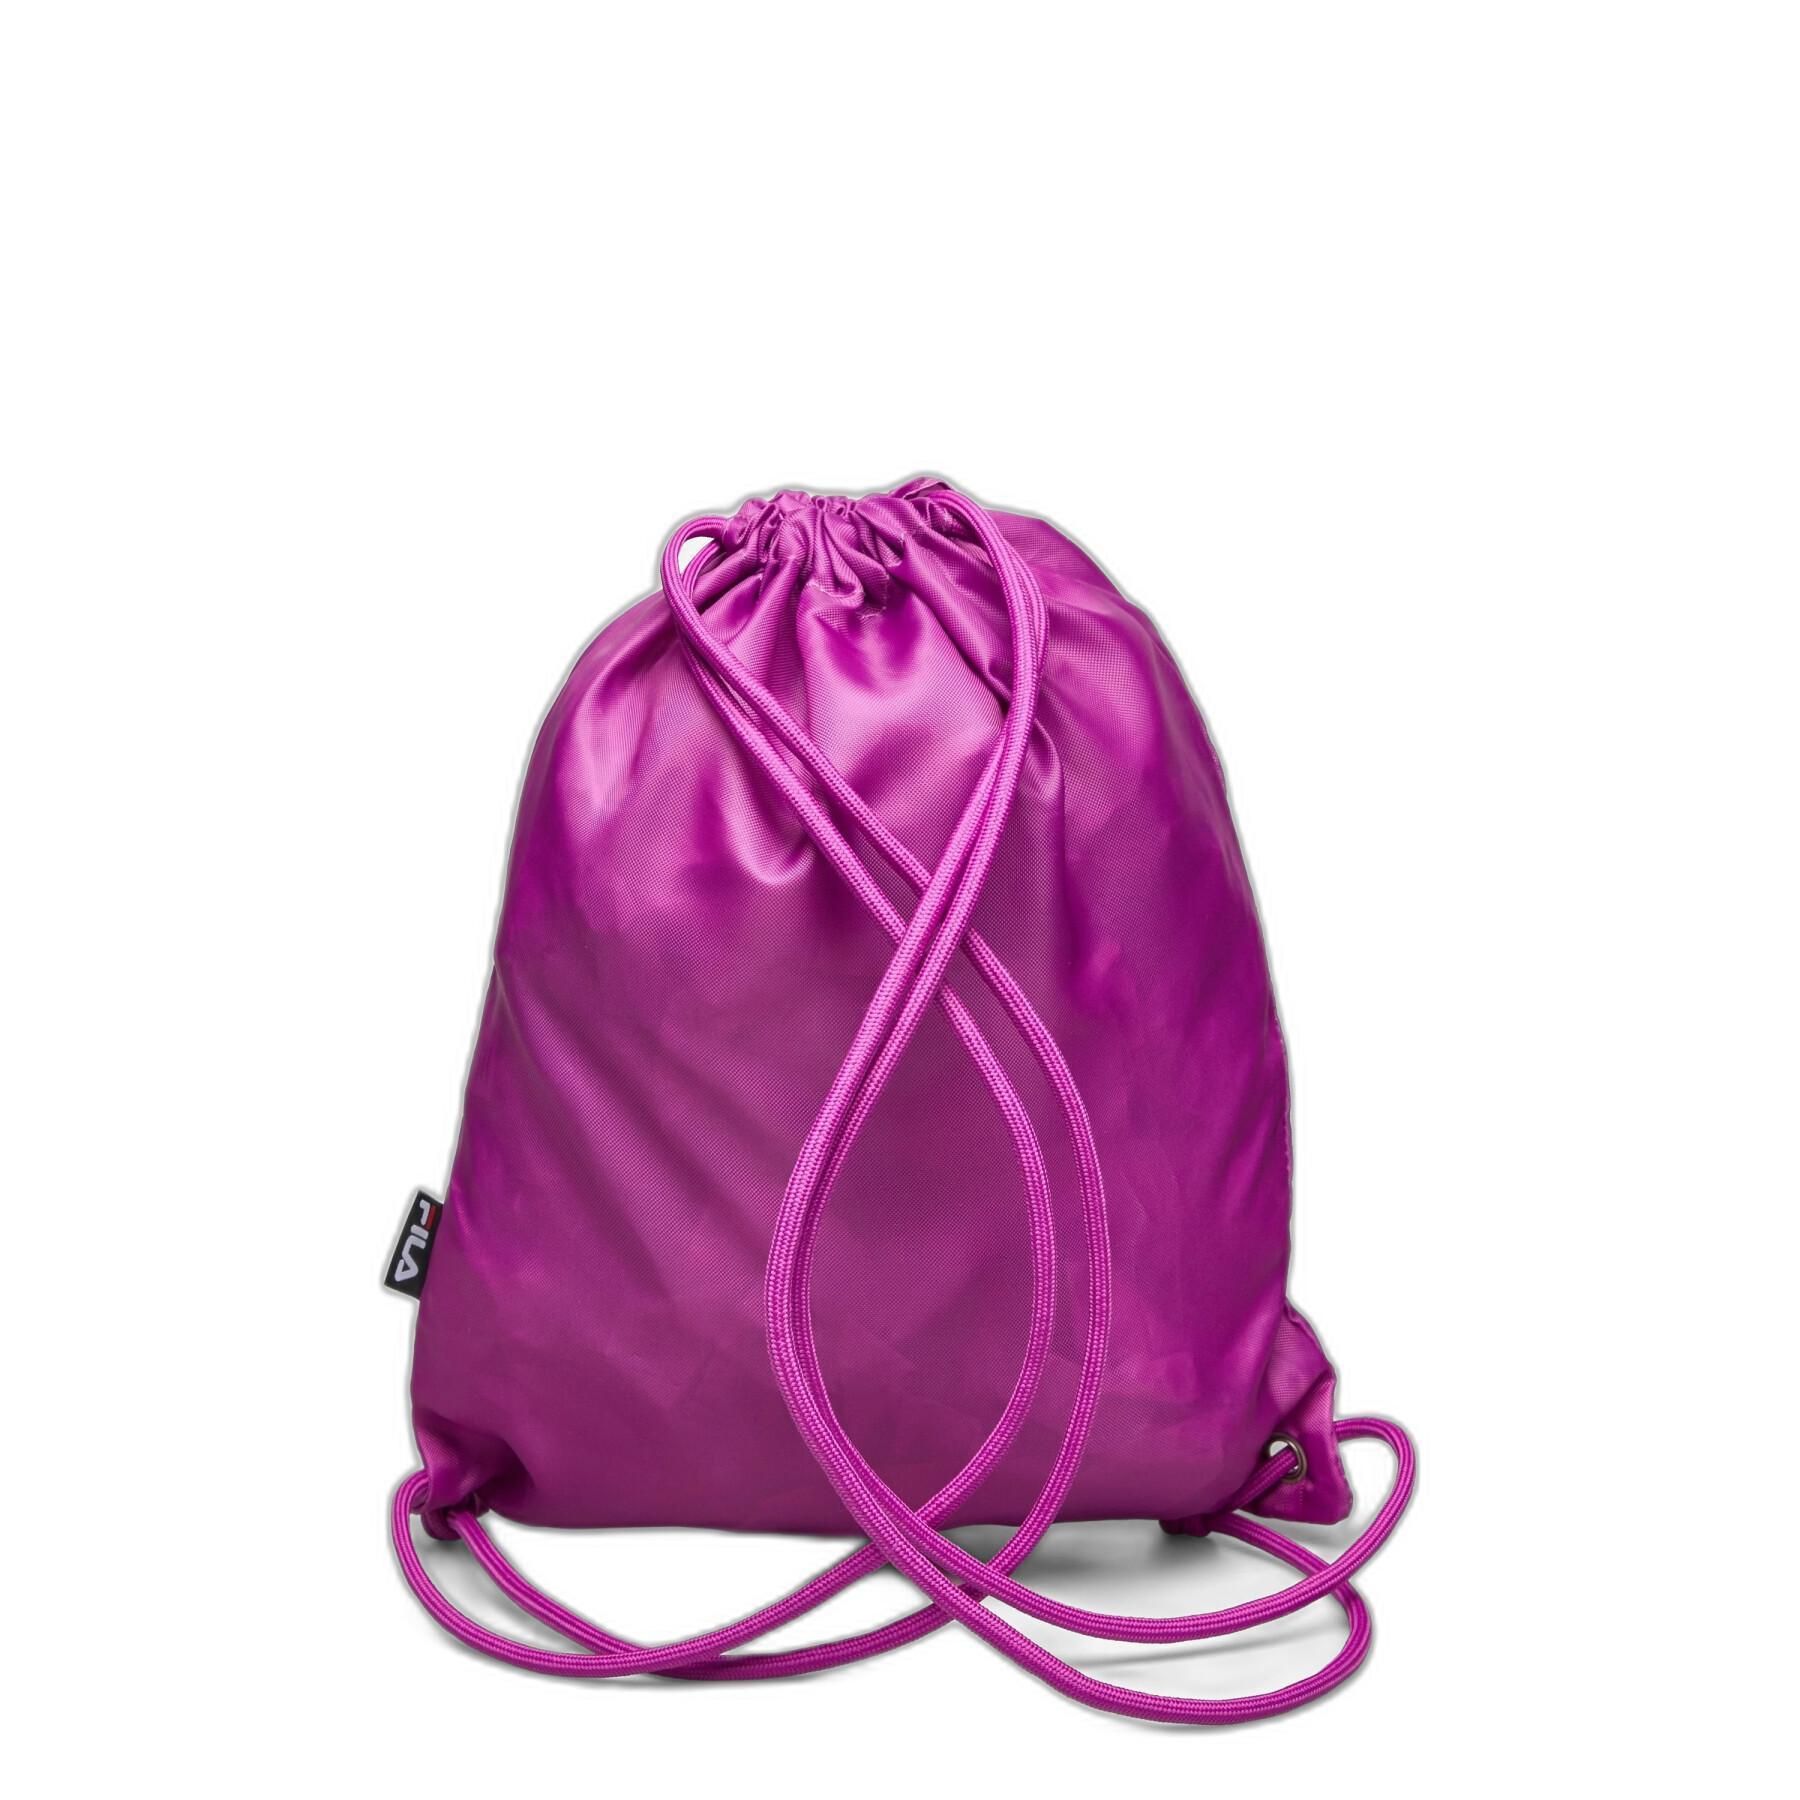 Drawstring backpack for kids Fila Bohicon Rainbow Small Sport